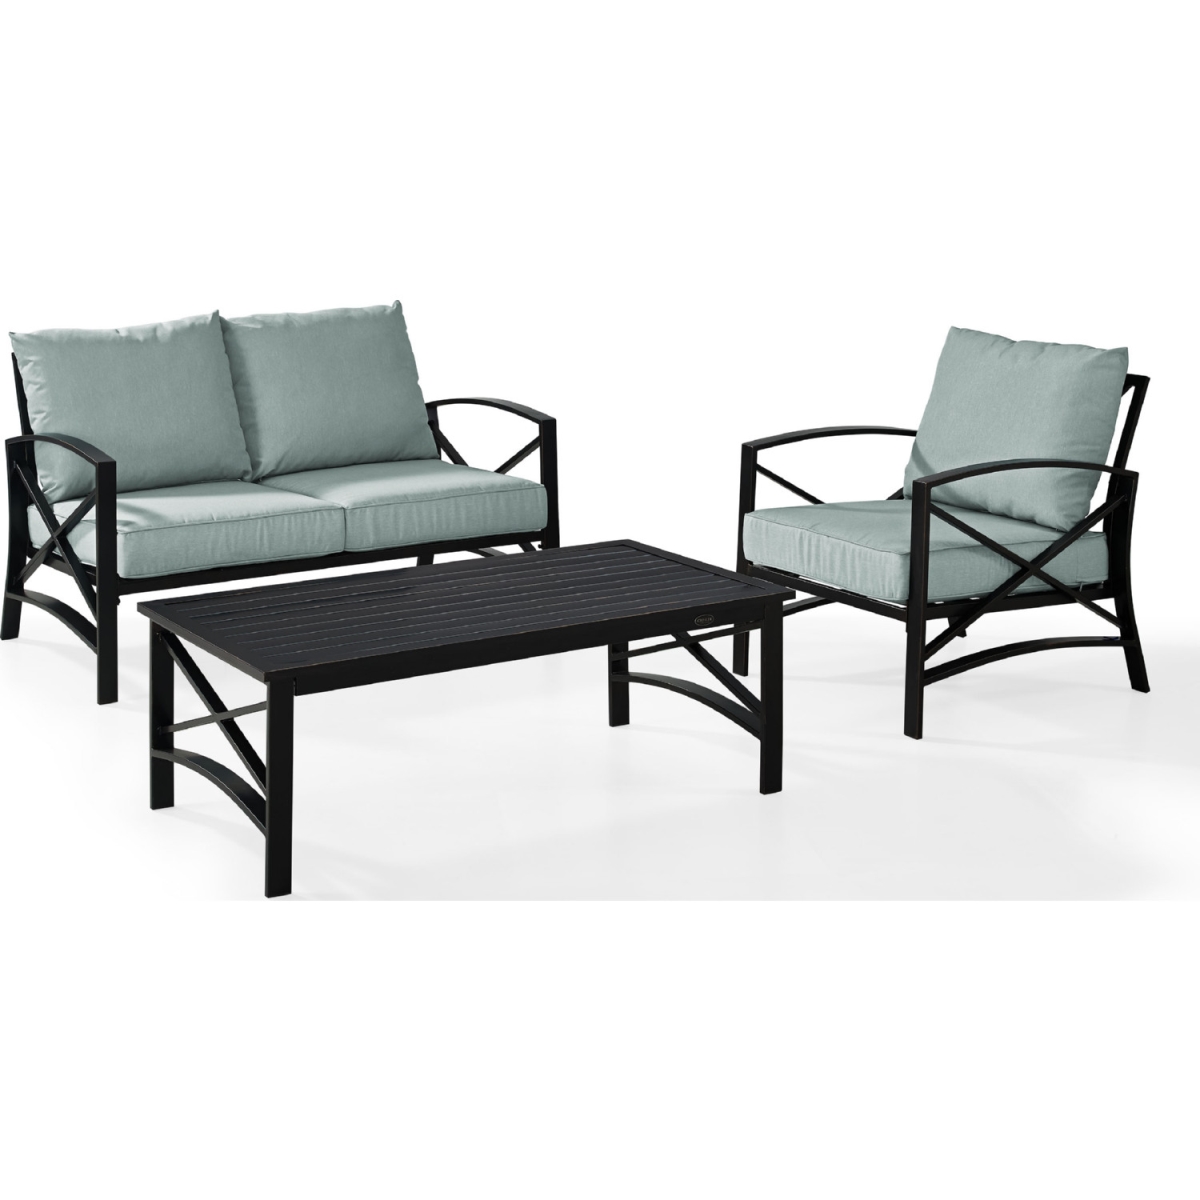 Ko60014bz-mi 3 Piece Kaplan Outdoor Seating Set With Mist Cushion - Loveseat, Chair, Coffee Table